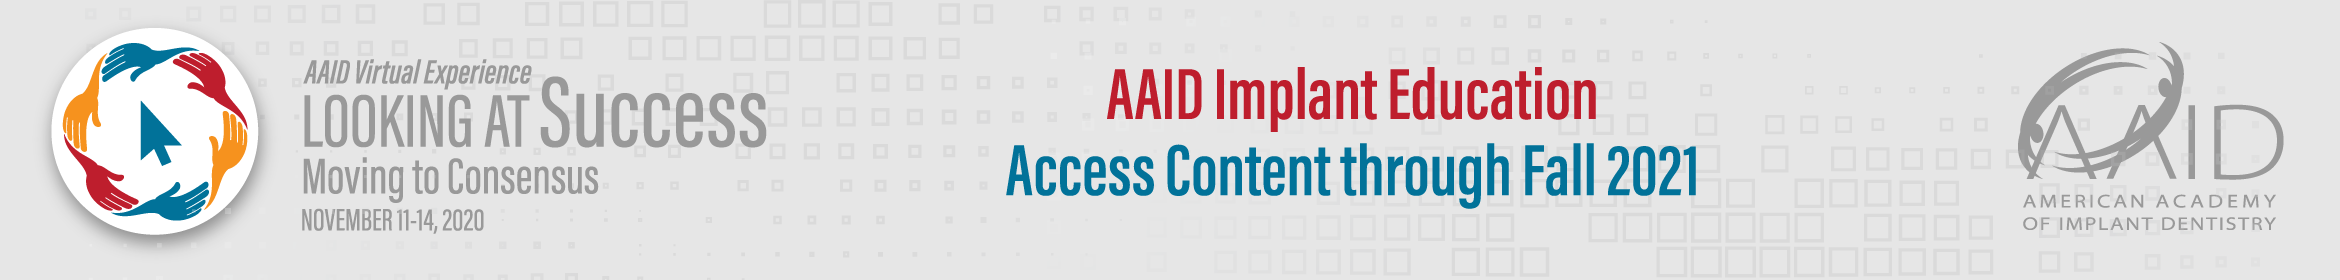 AAID 2020 Virtual Experience Main banner